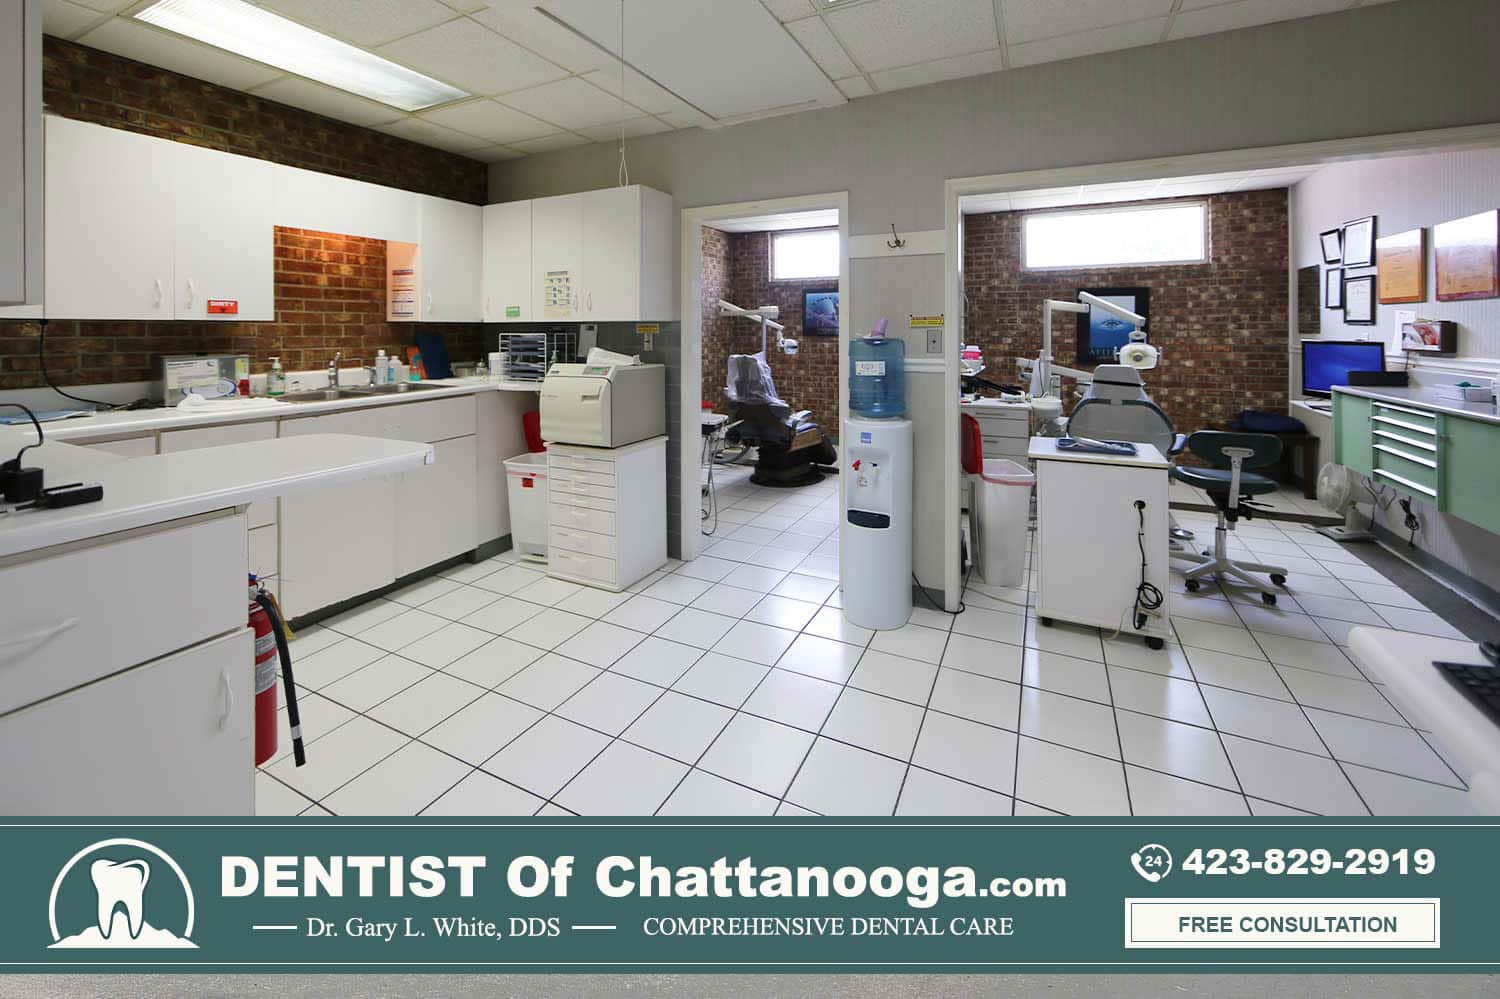 Dentist Of Chattanooga, US, https://www